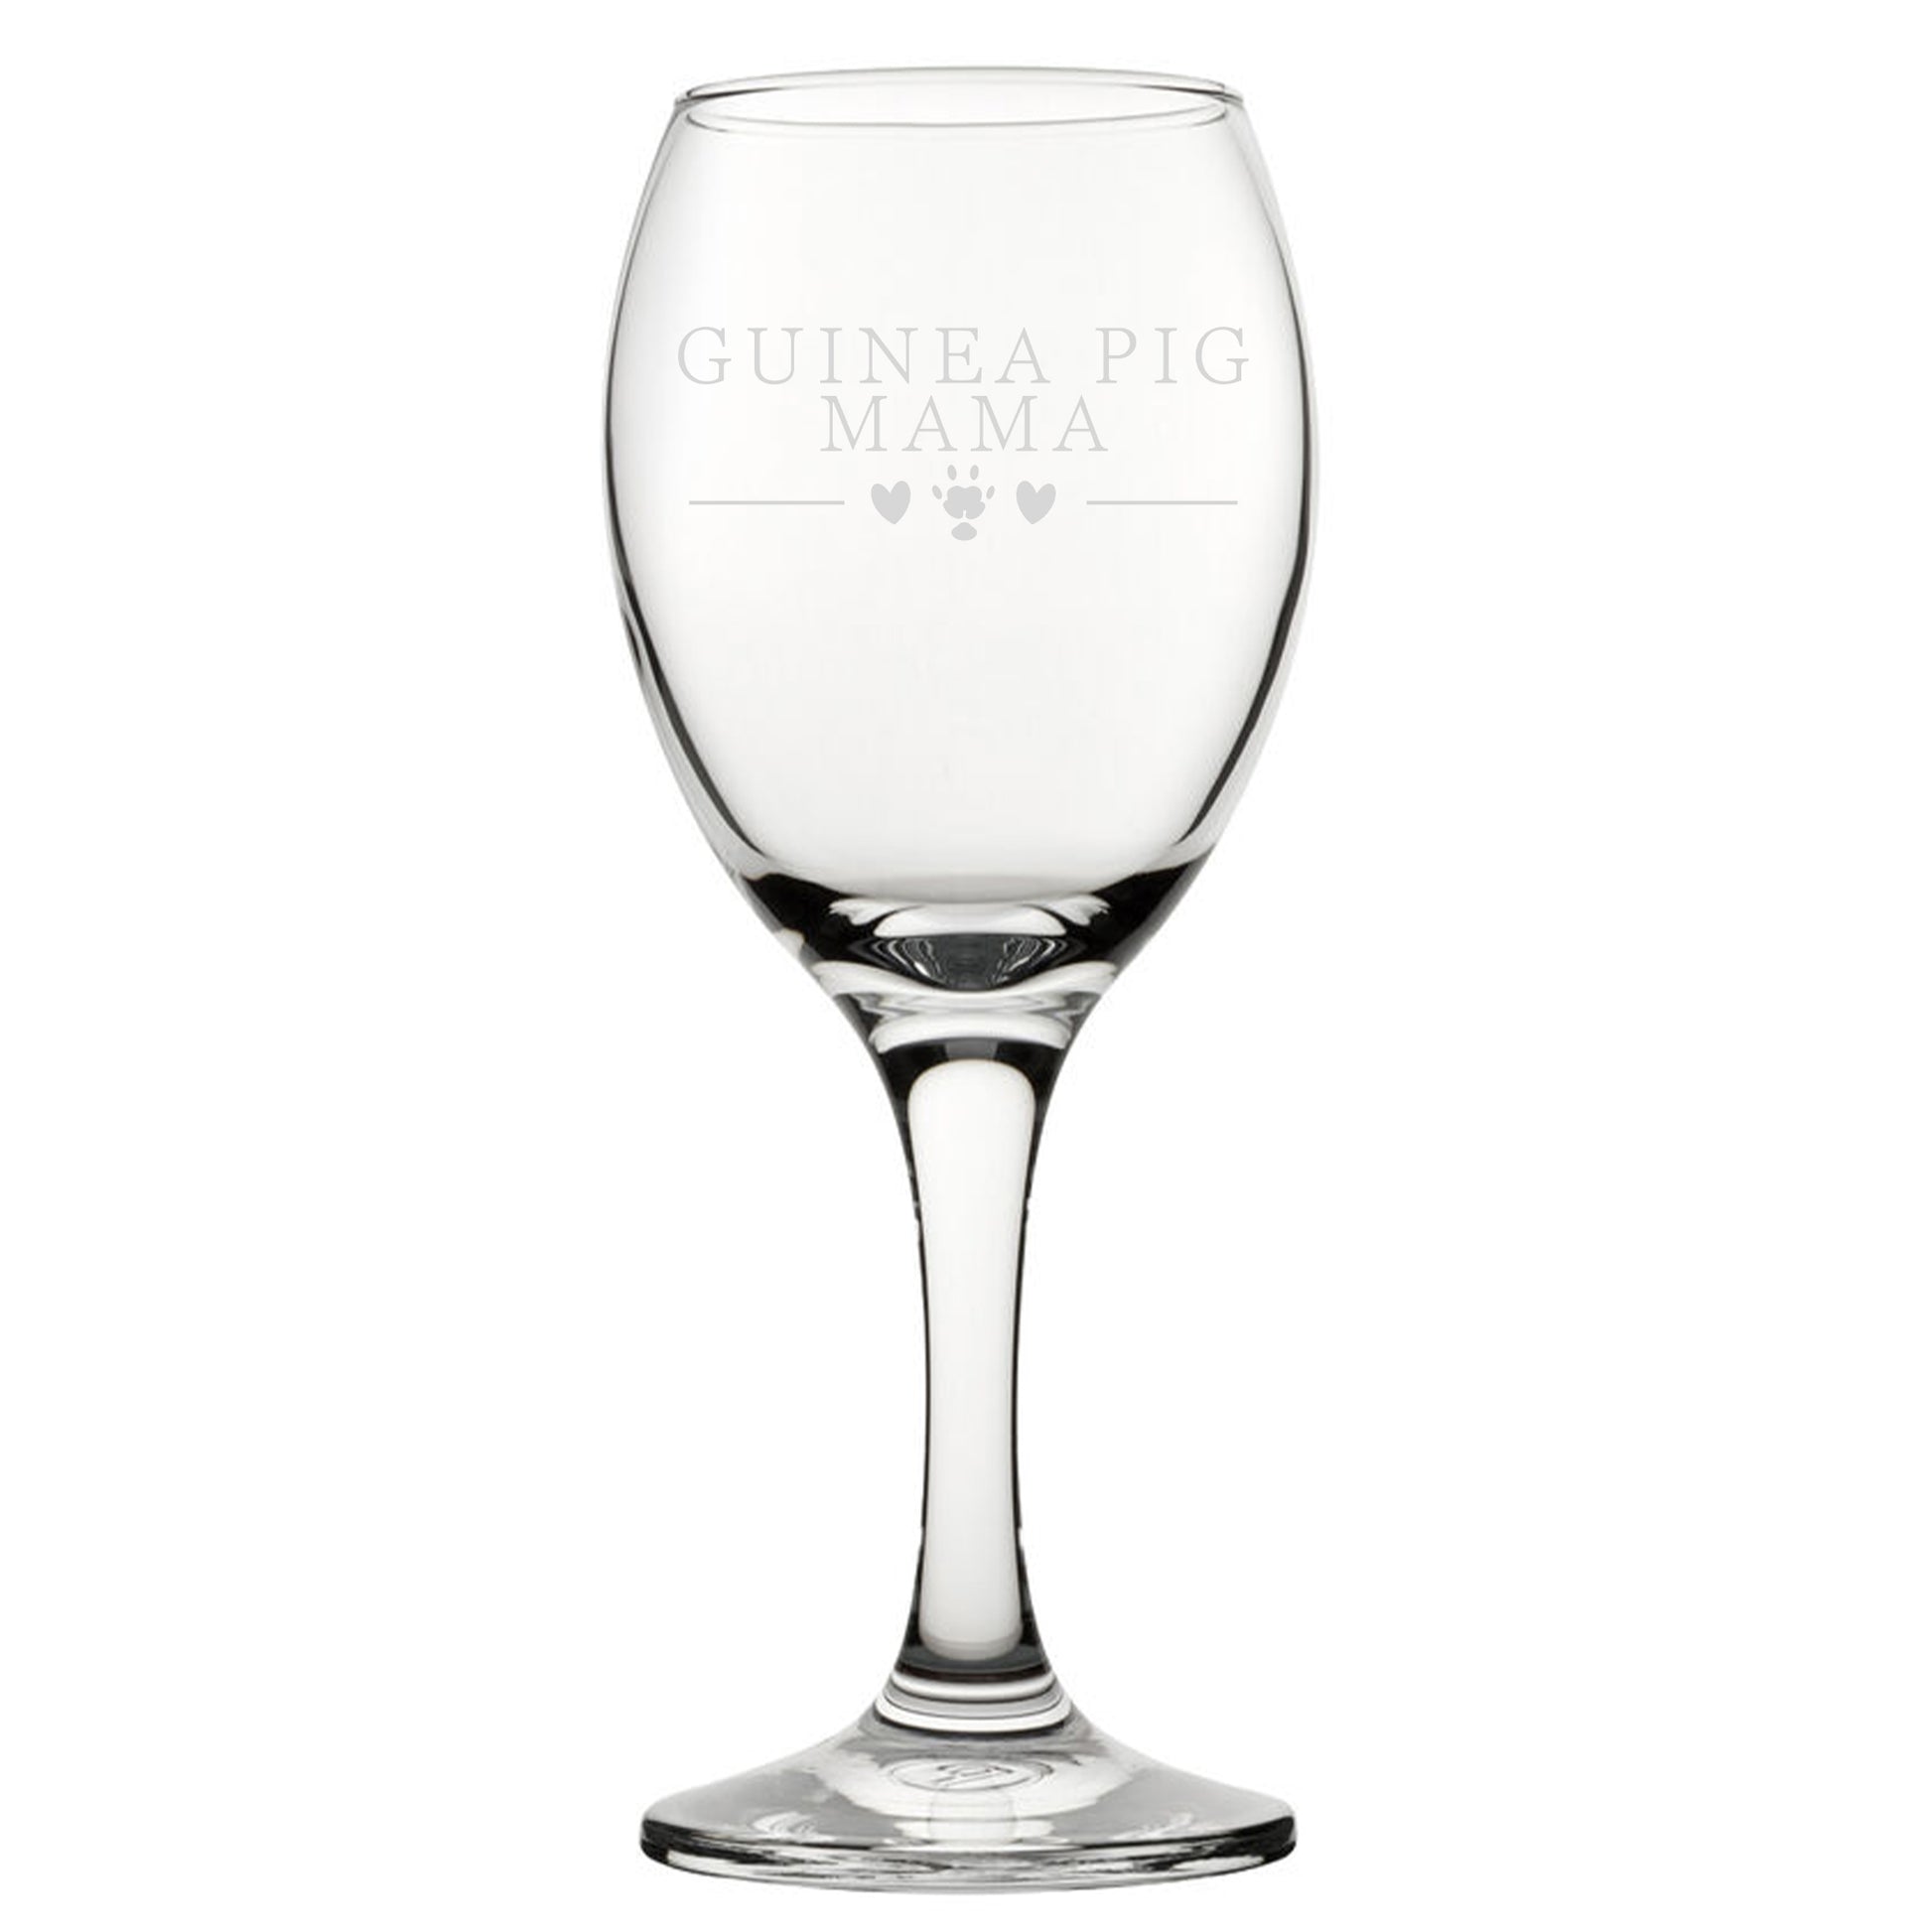 Guinea Pig Mama - Engraved Novelty Wine Glass Image 2